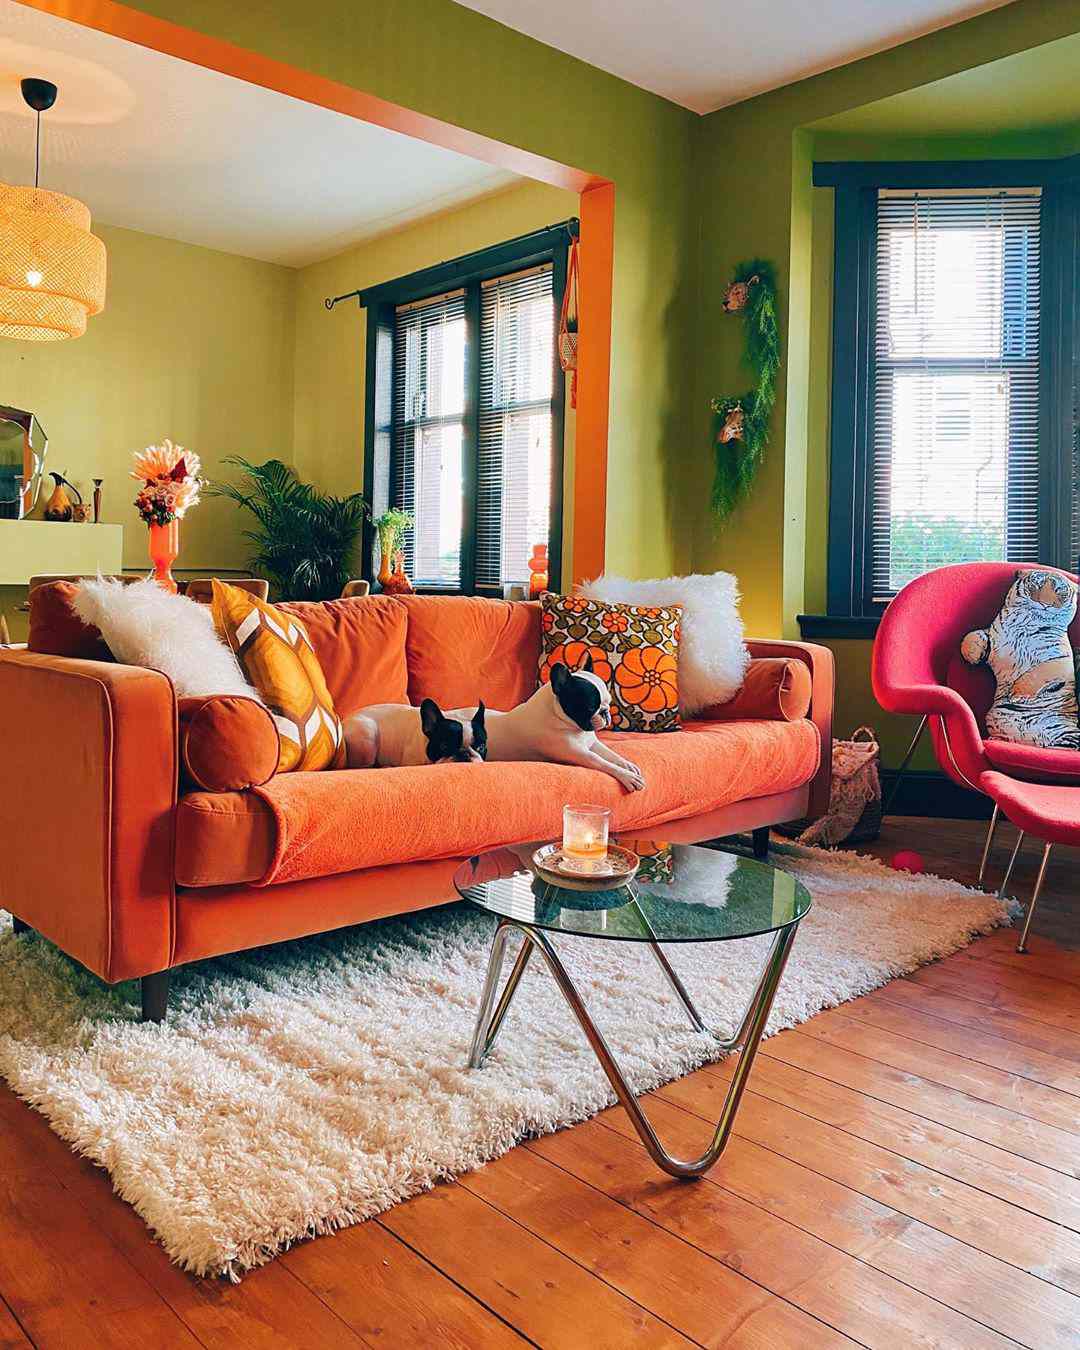 sofá laranja e paredes verdes